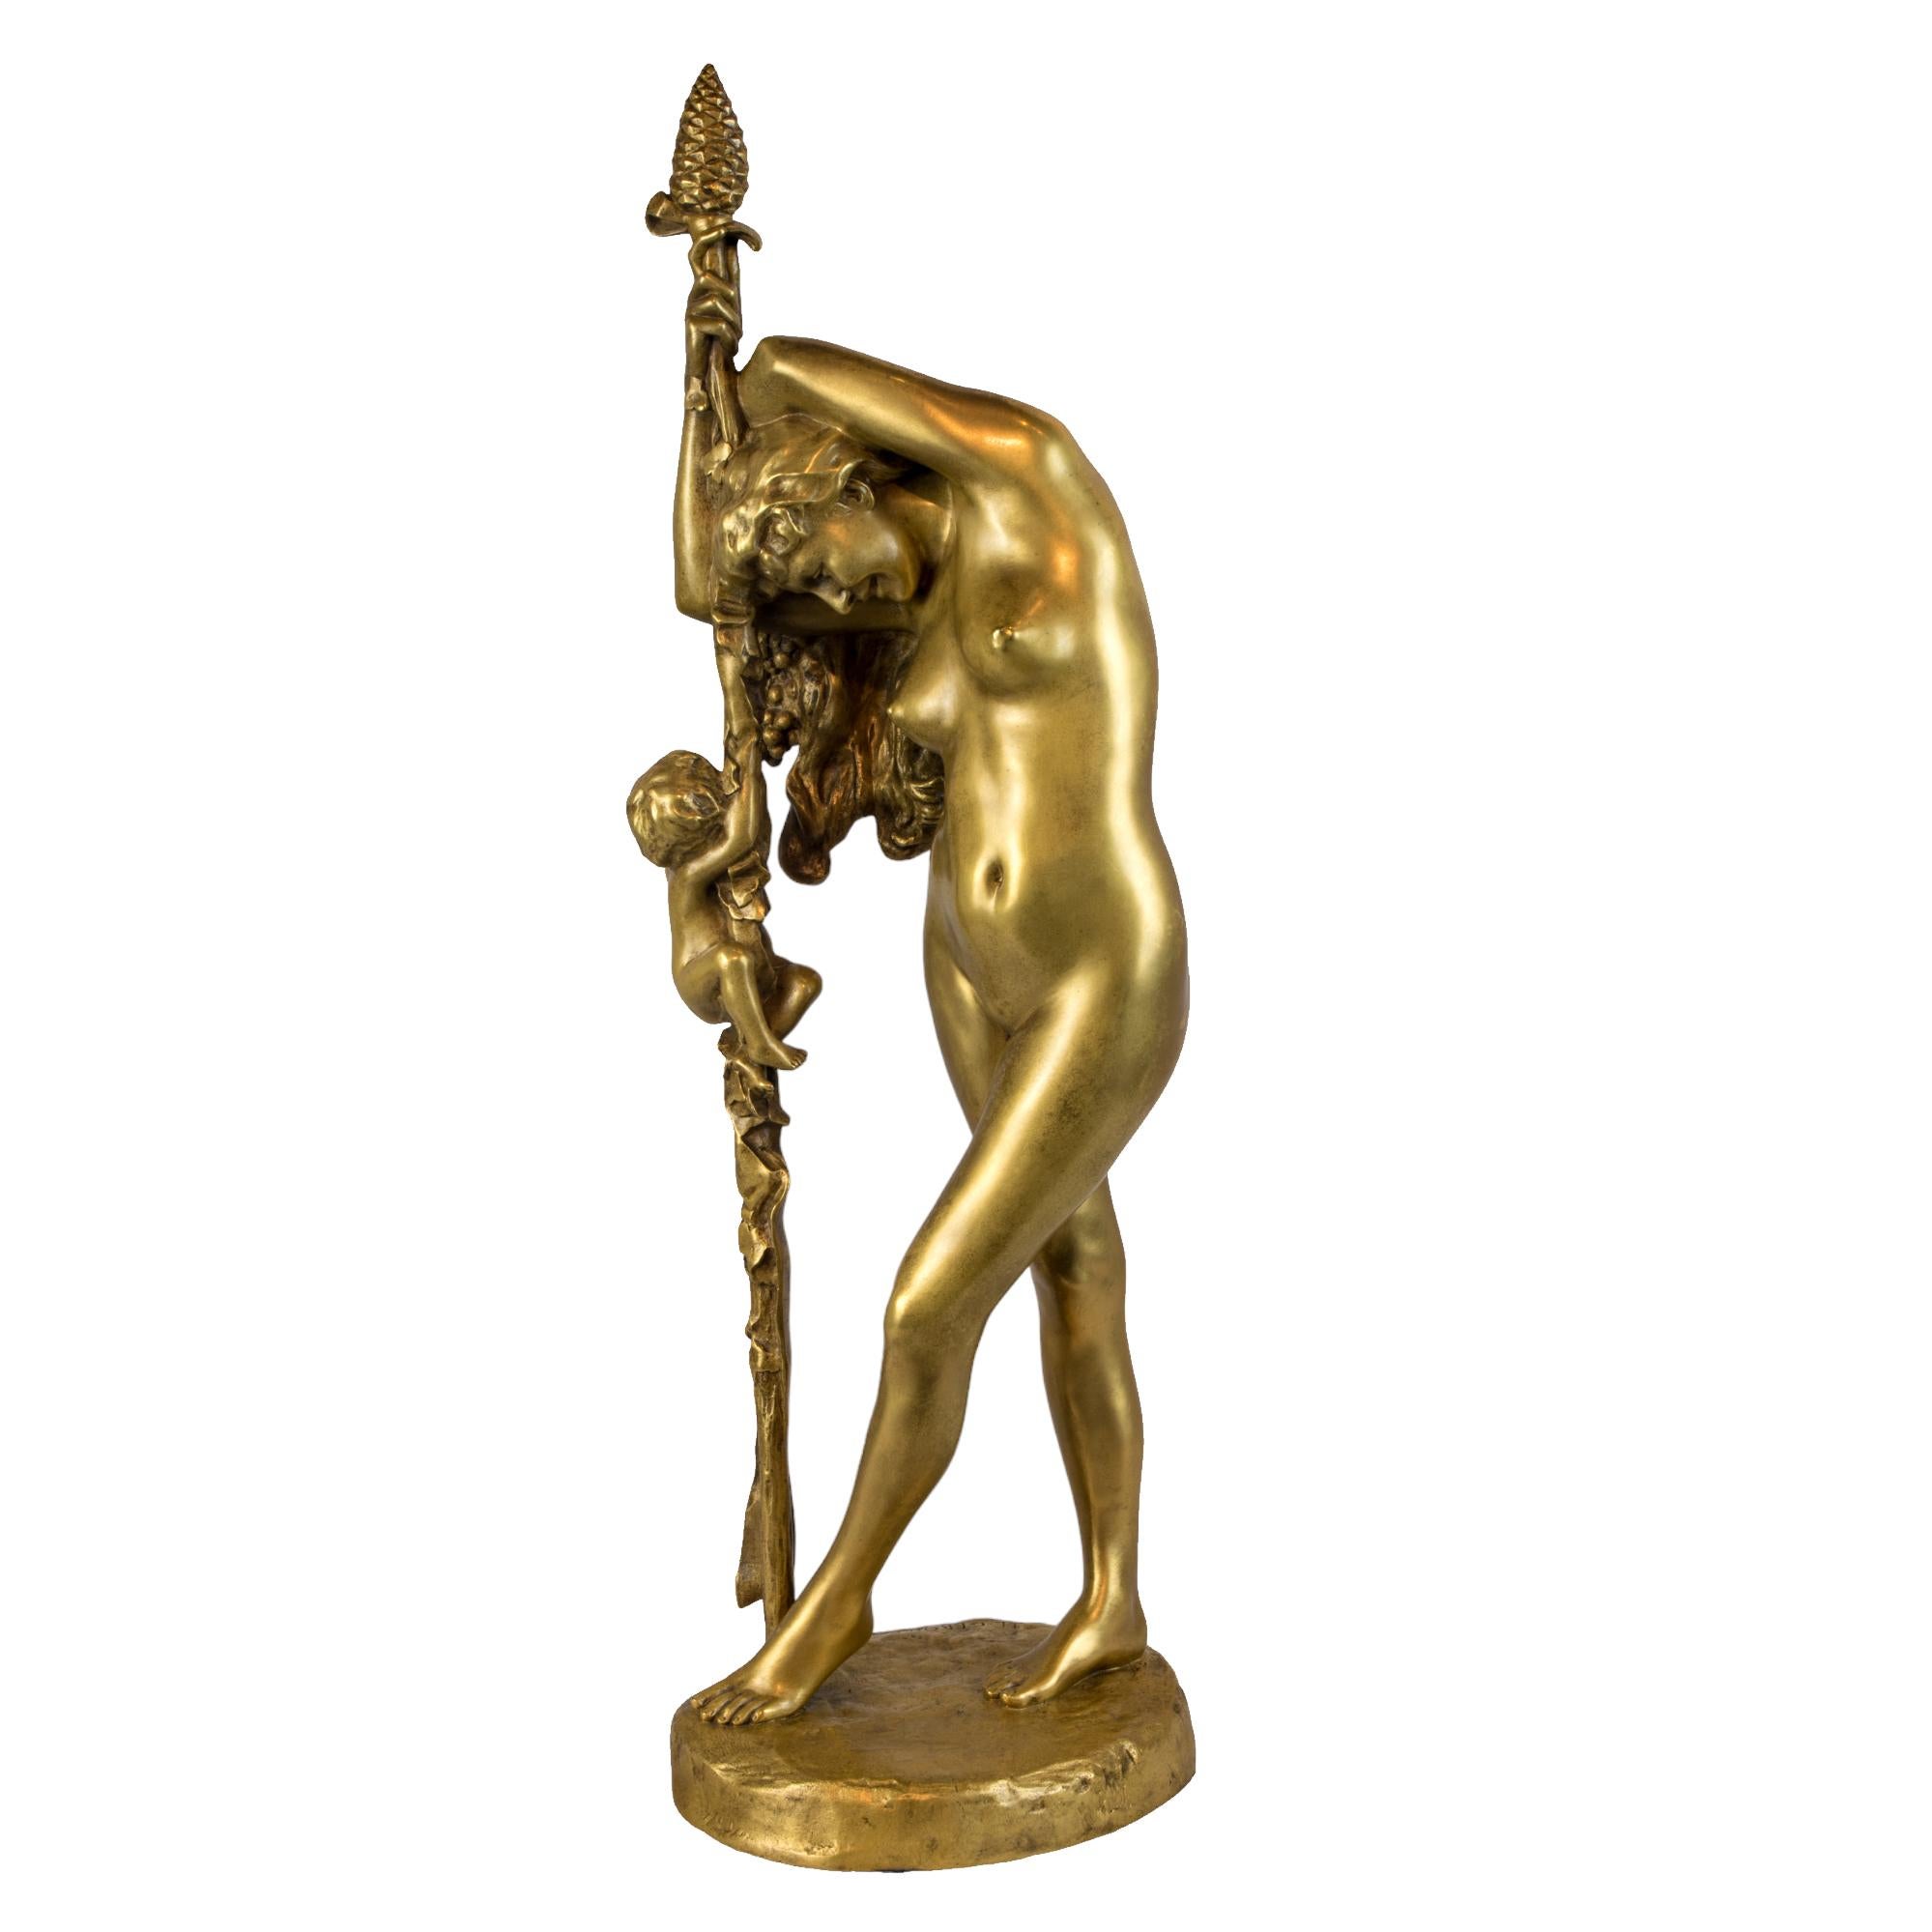 Jean-Léon Gérôme Figurative Sculpture - Fine 19th Century Gilt-Bronze Sculpture by JEAN-LEON GEROME